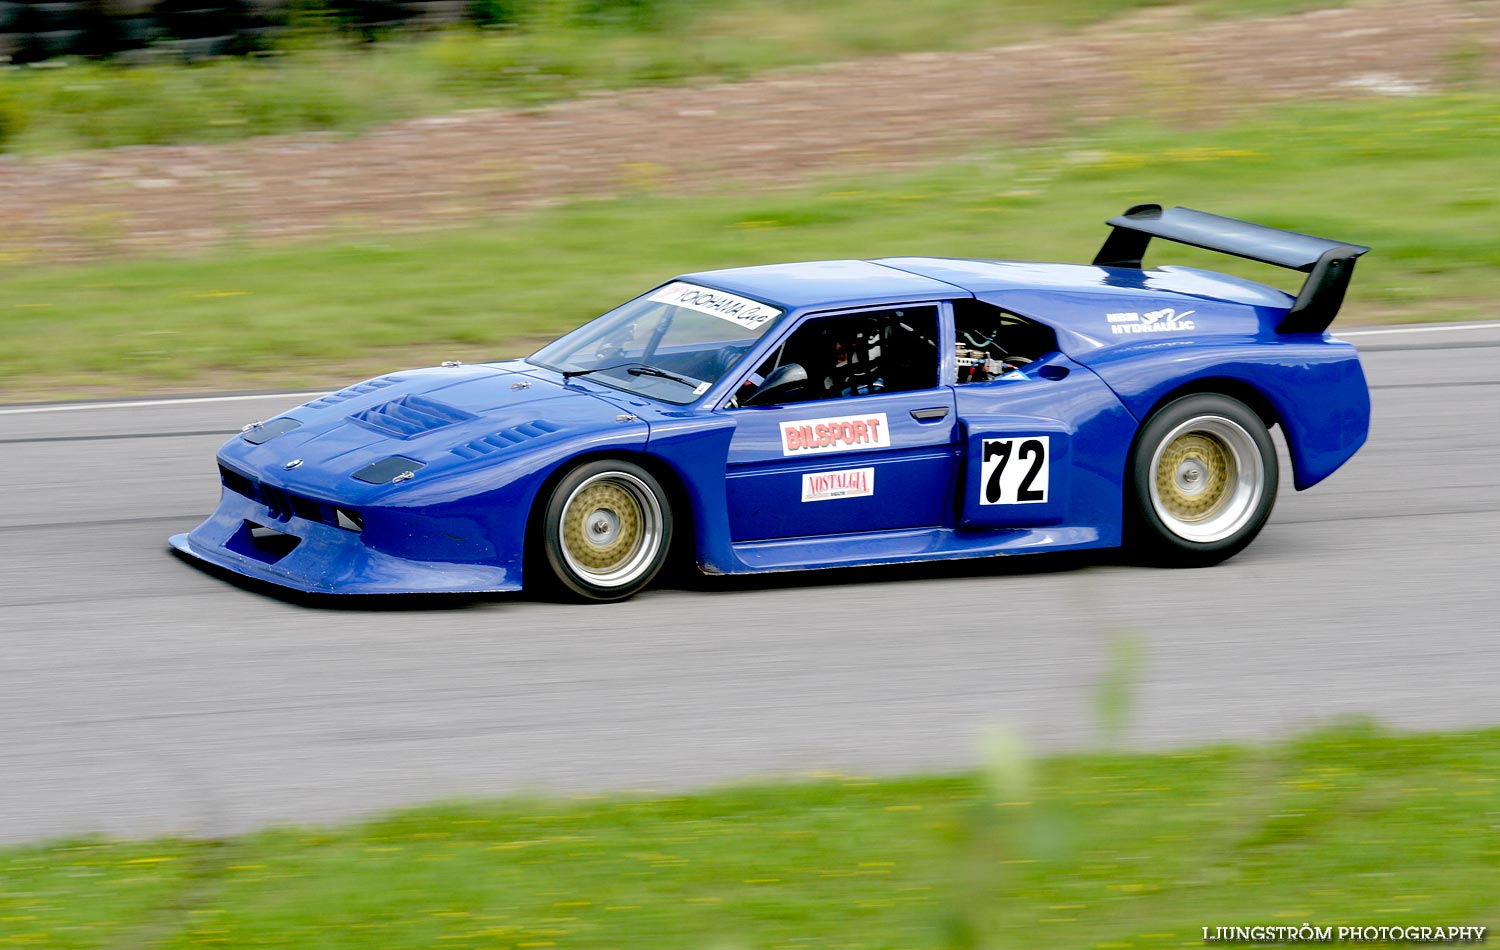 SSK Raceweek,mix,Kinnekulle Ring,Götene,Sverige,Motorsport,,2009,107516